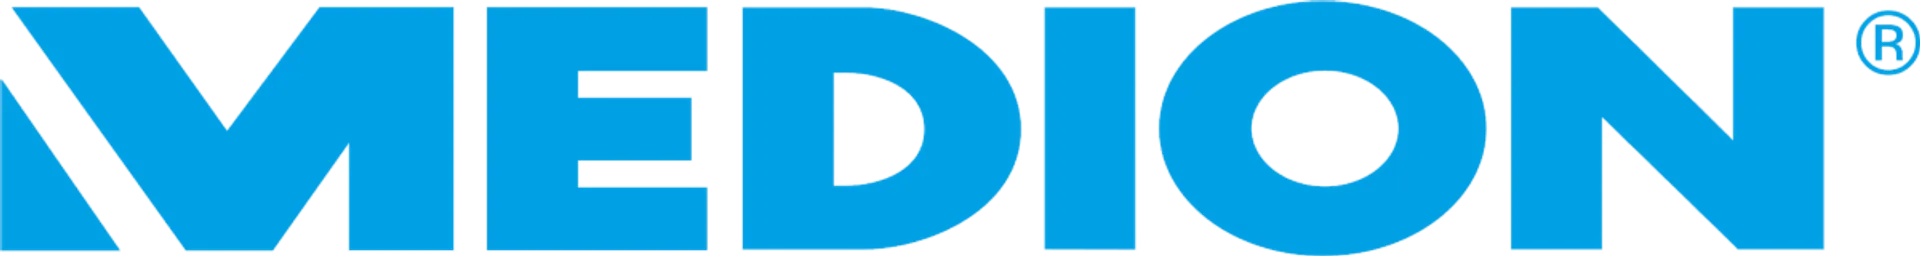 MEDION logo